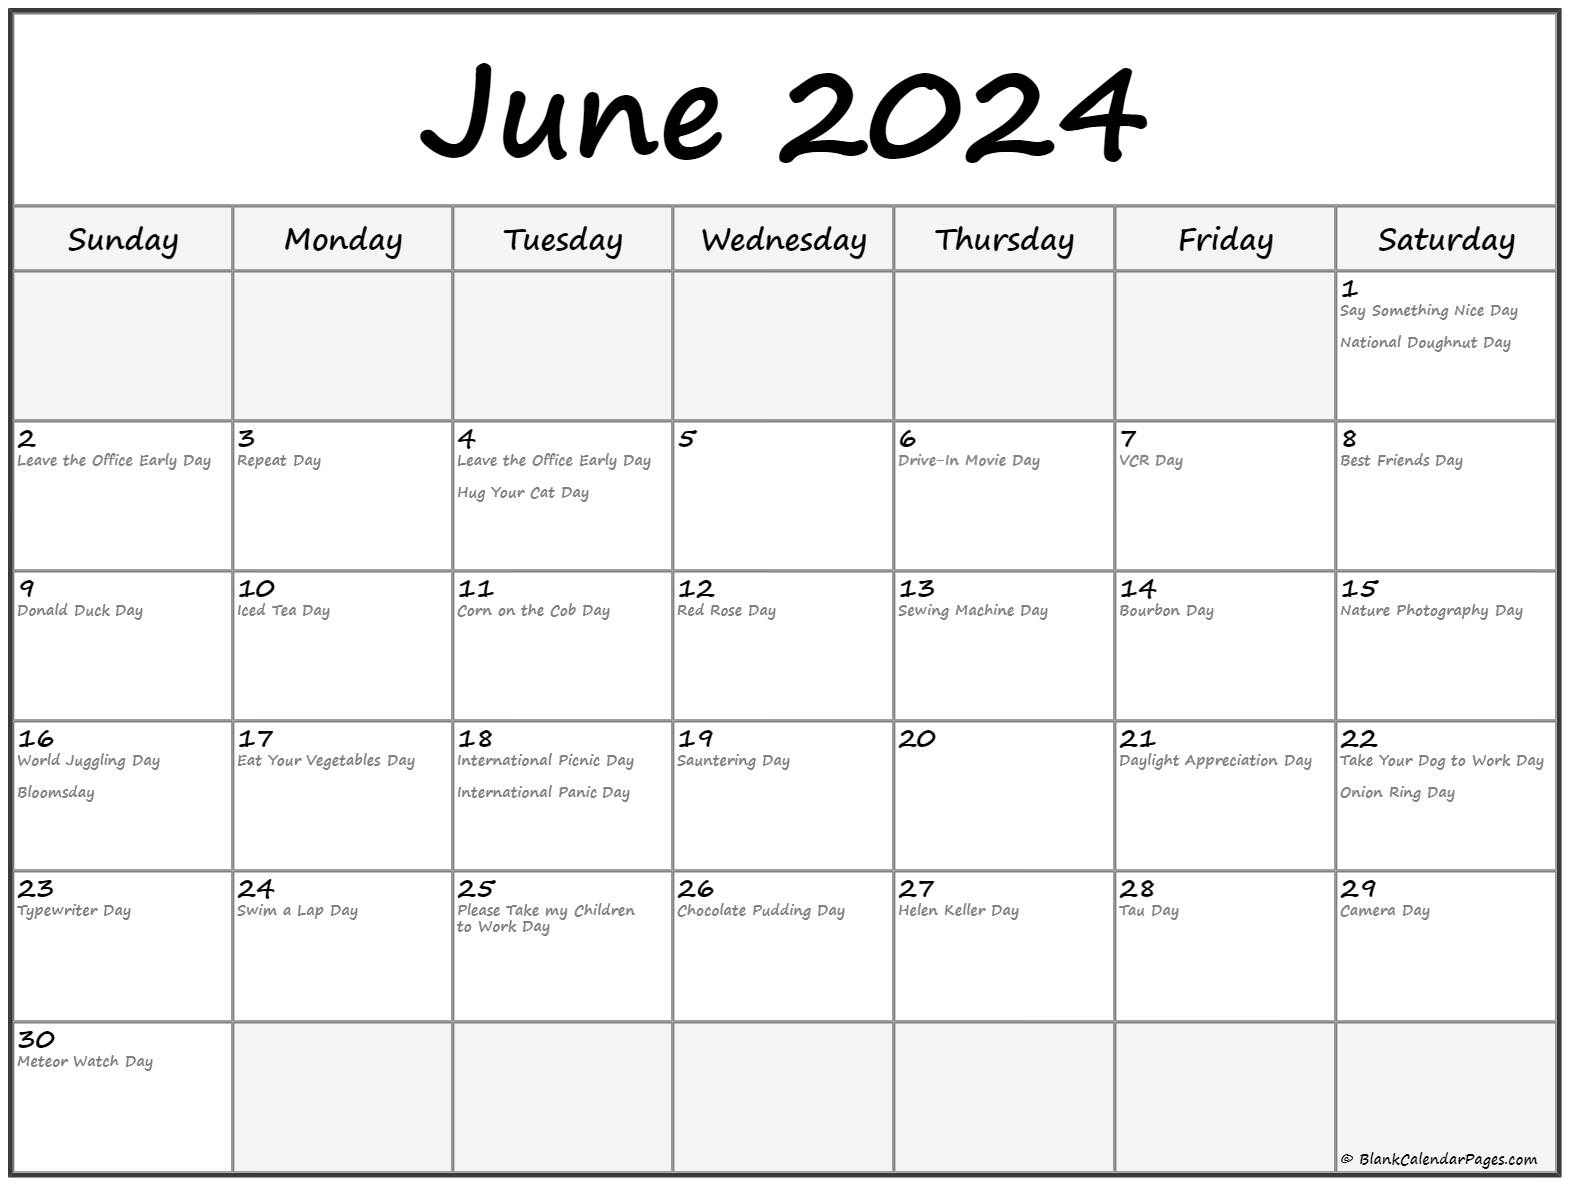 national-day-calendar-june-2023-get-calender-2023-update